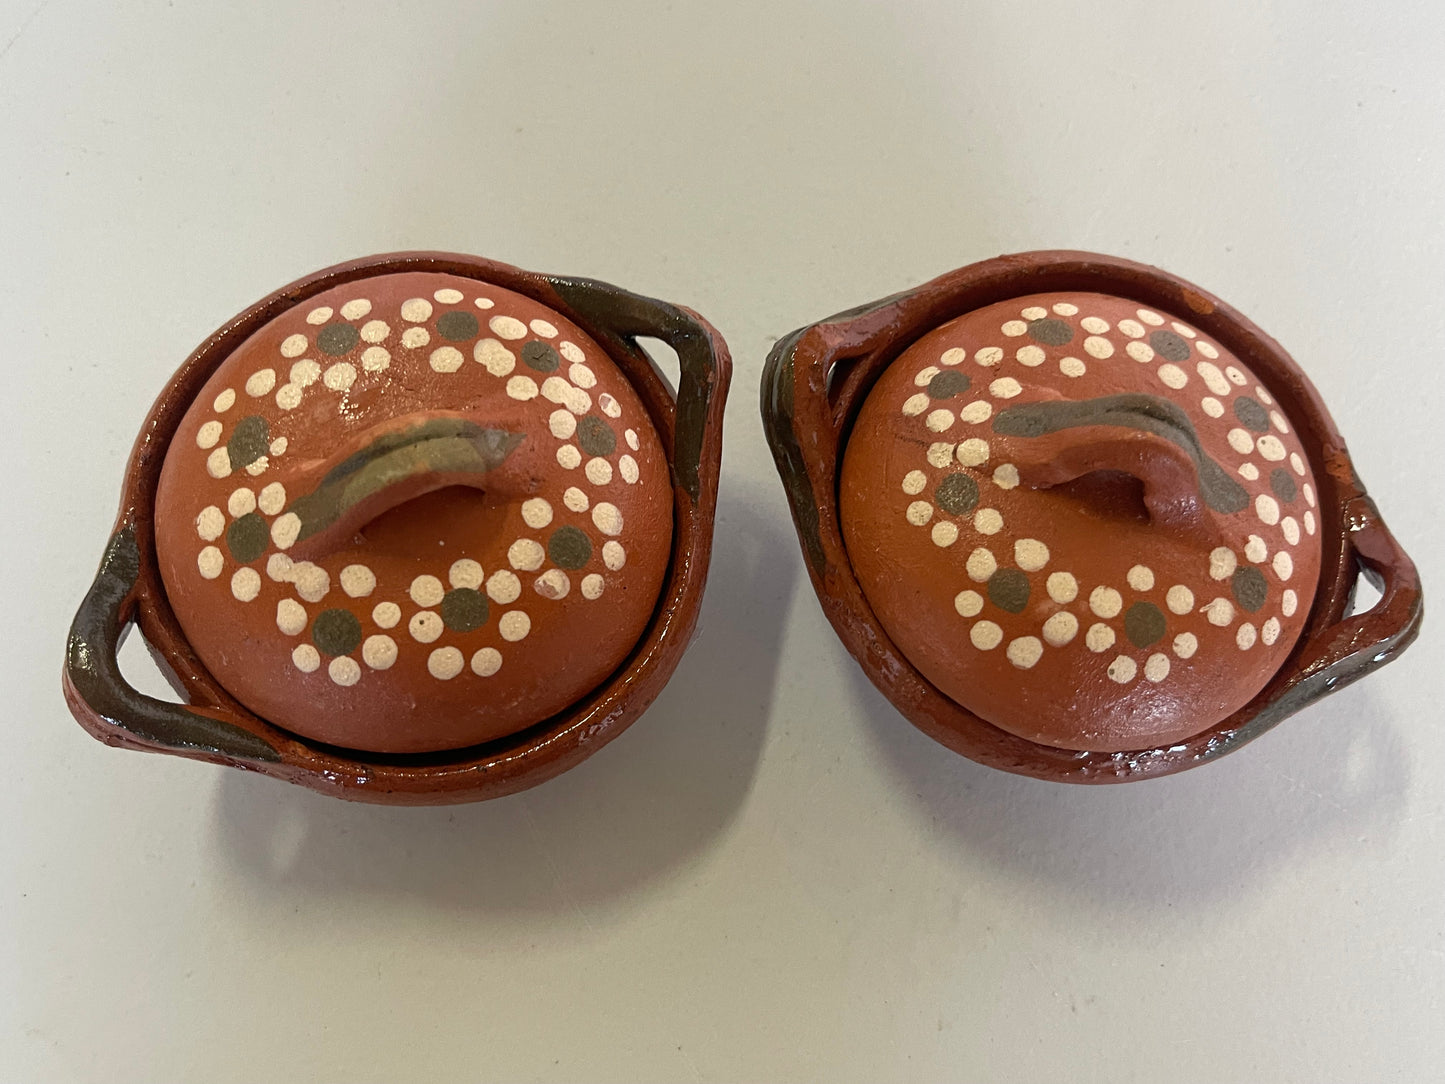 Mini cazuelita arrocera de barro/mini clay casserole 8-9cm-2pc set